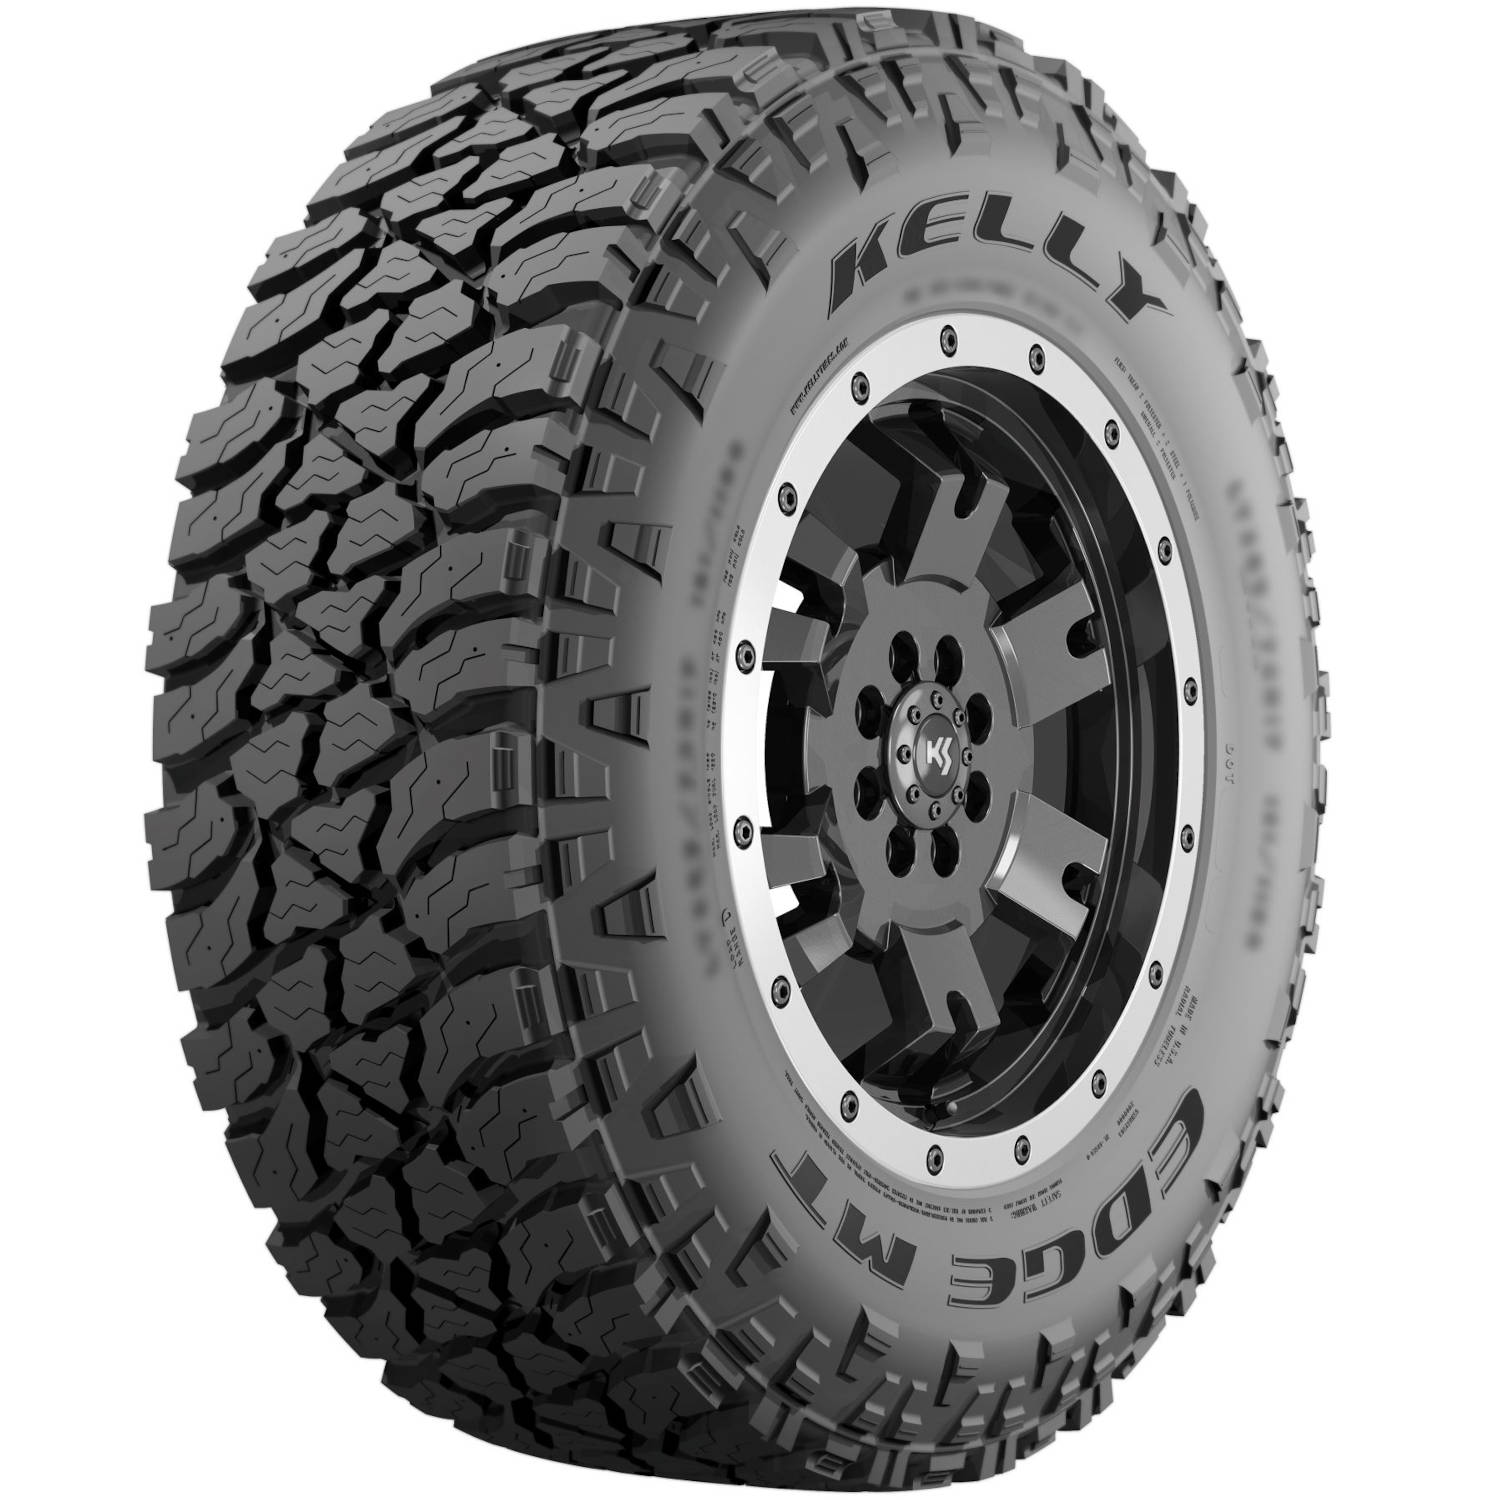 KELLY EDGE MT 265/75R16 (31.7X10.4R 16) Tires